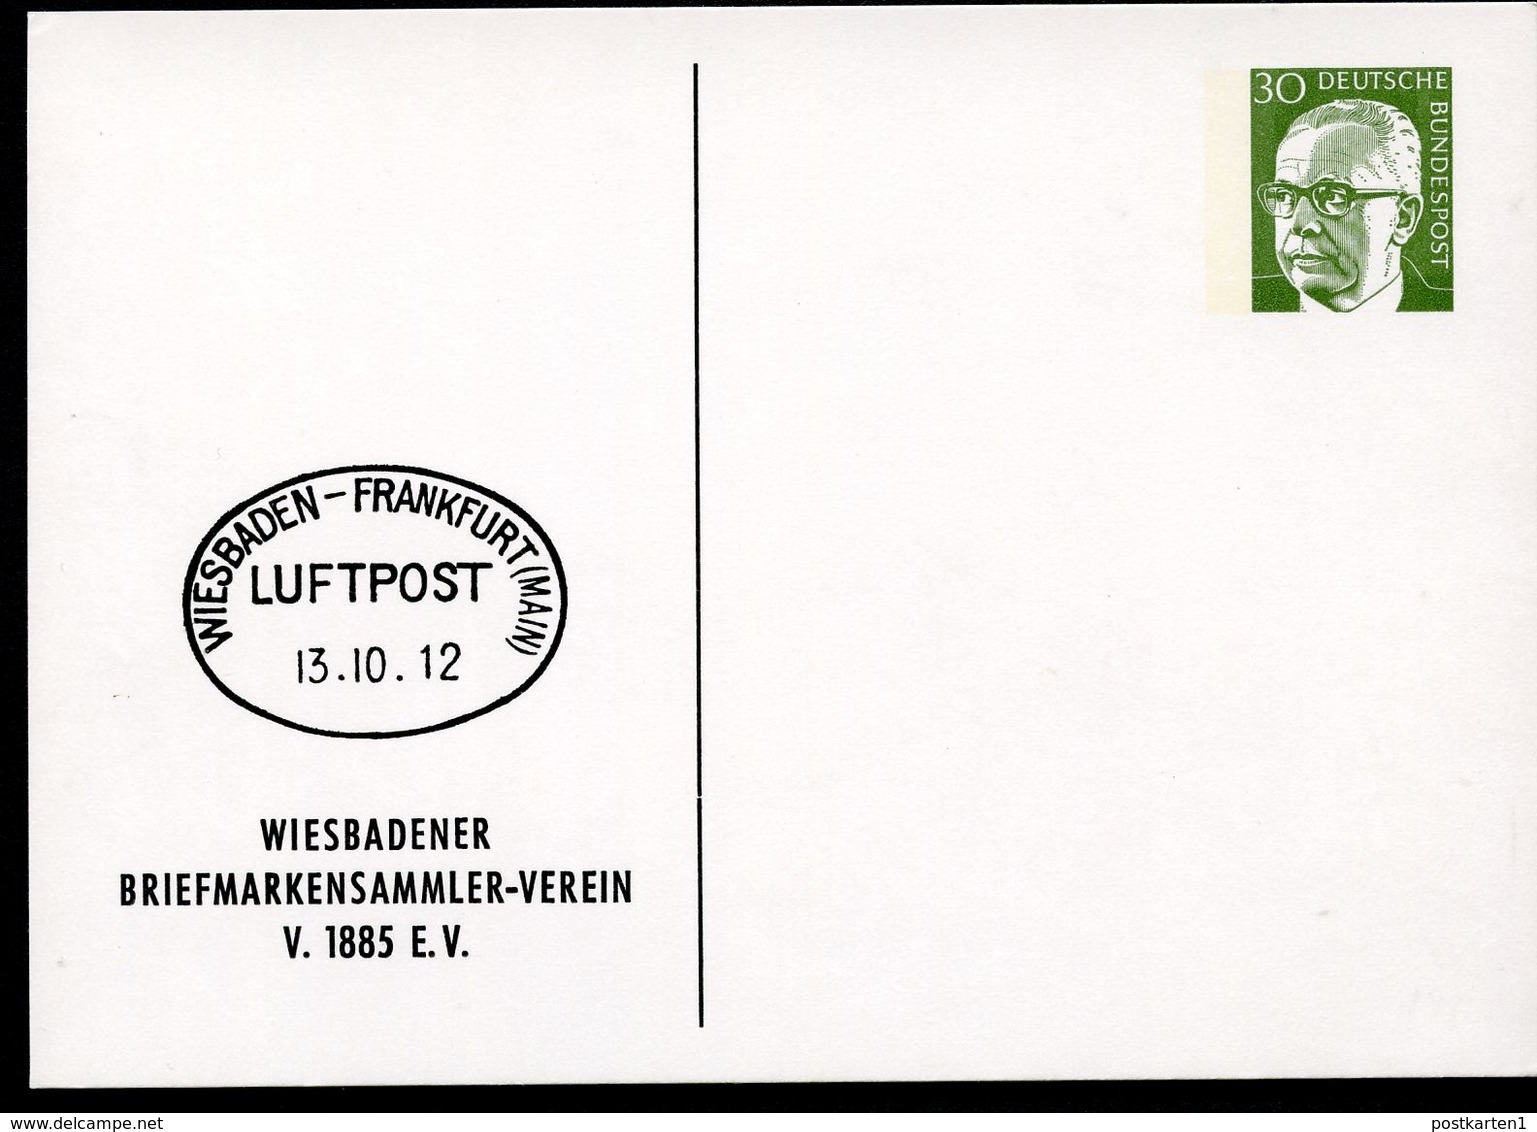 Bund PP46 B2/004-I LUFTPOSTSTEMPEL WIESBADEN - FRANKFURT 1912 1972  NGK 4,00 € - Private Postcards - Mint